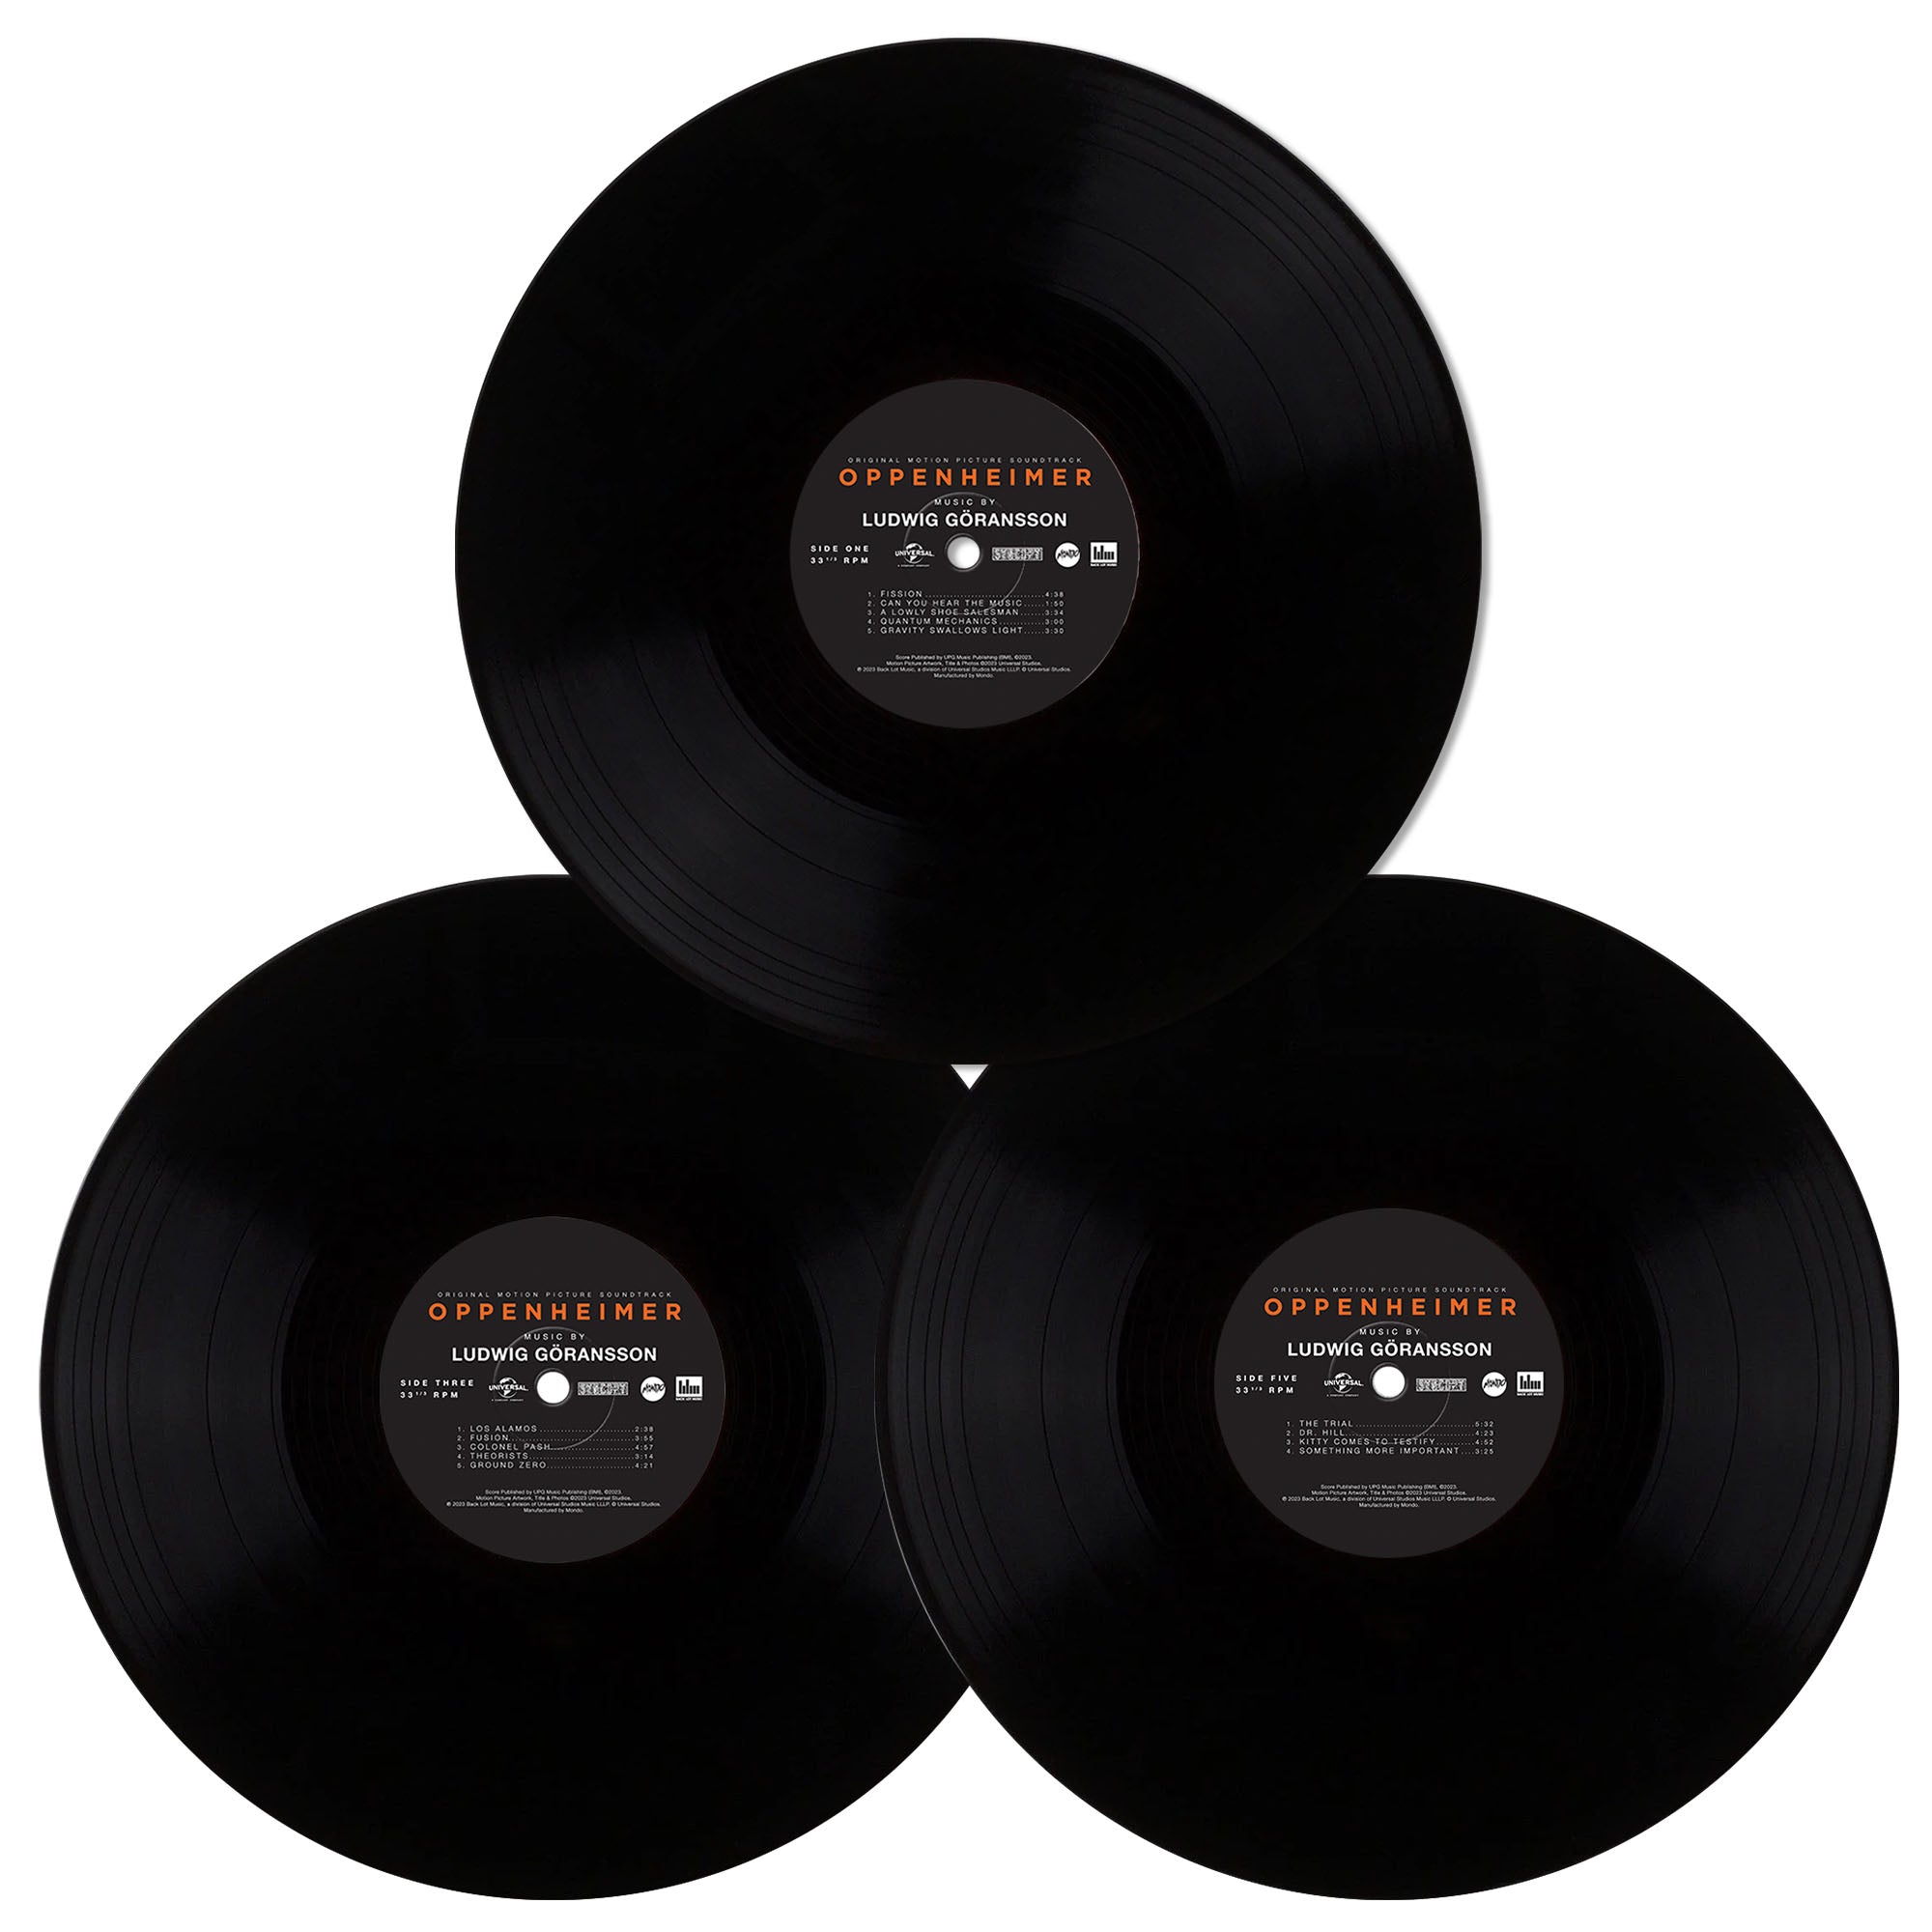 Soundtrack Vinyls 💗 #vinyl #vinyl #record #records #soundtrack #sound